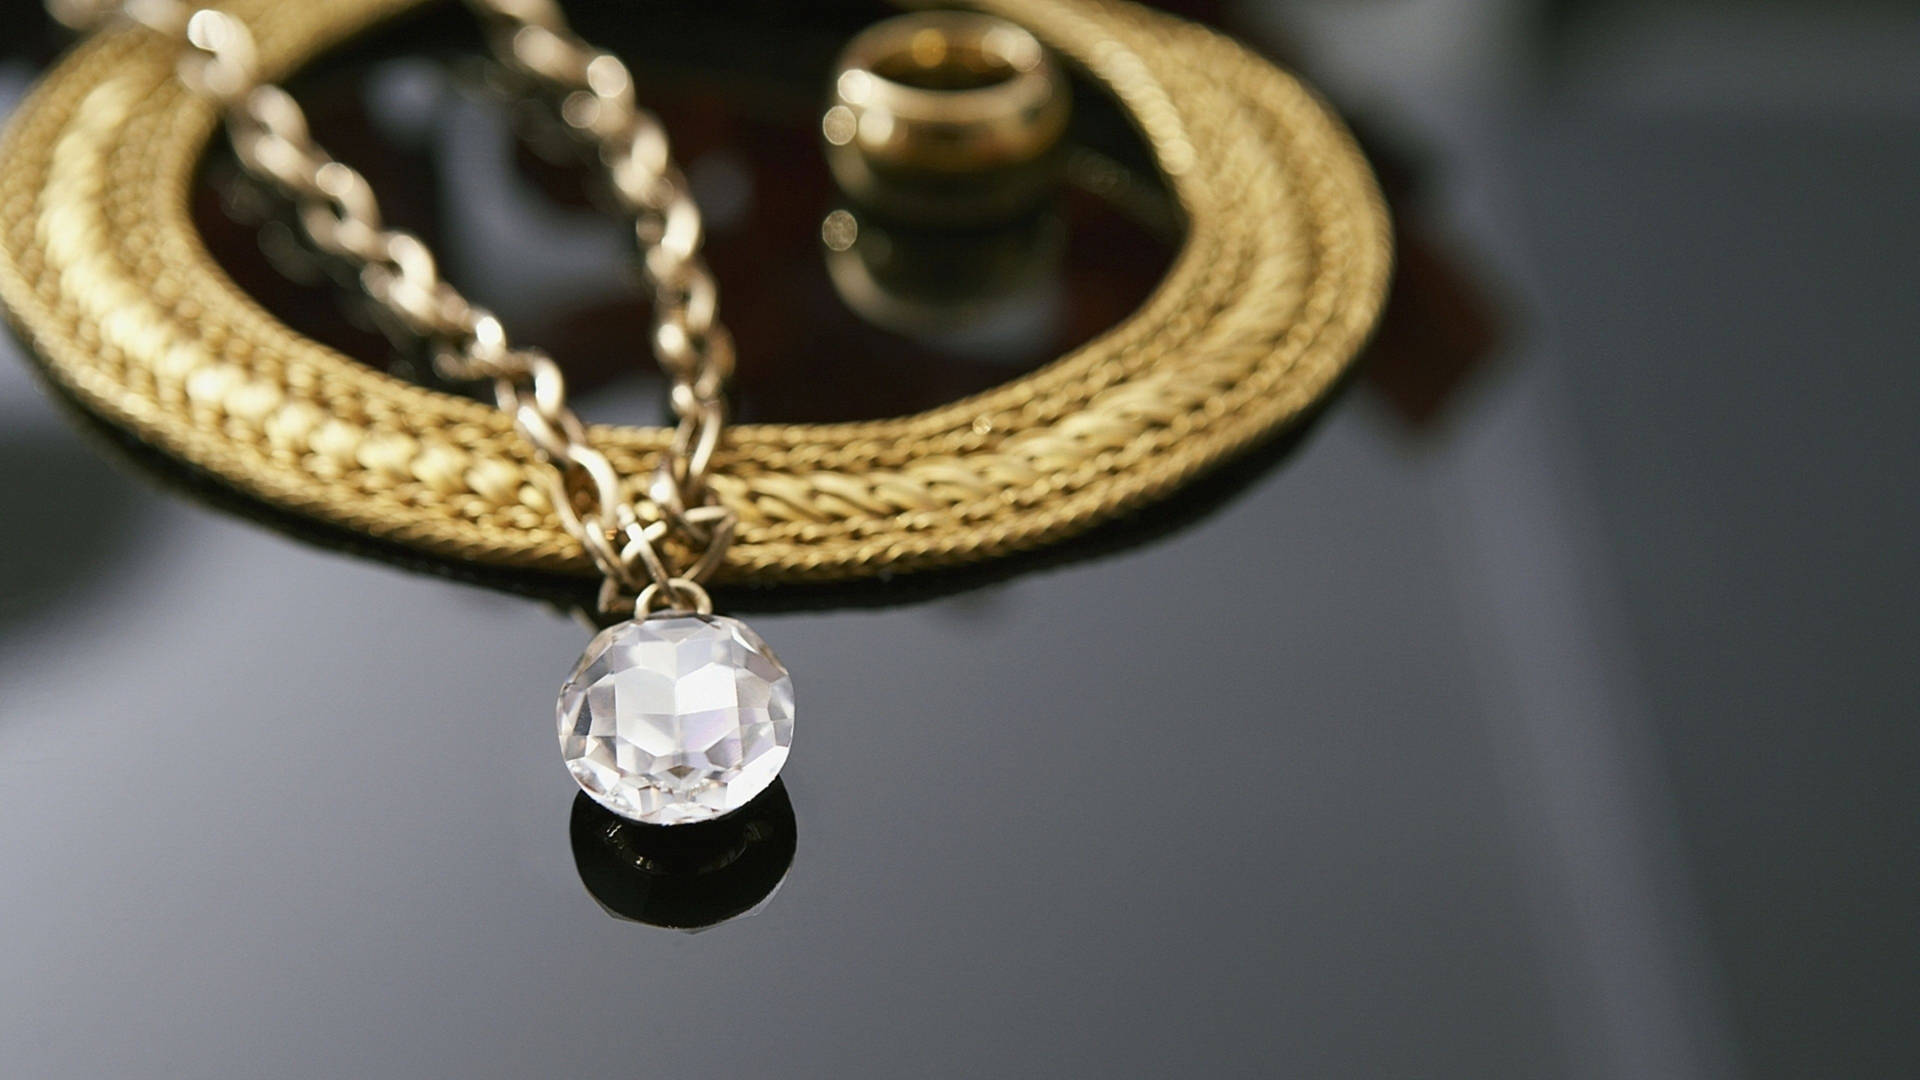 Jewelry Necklace With Diamond Pendant